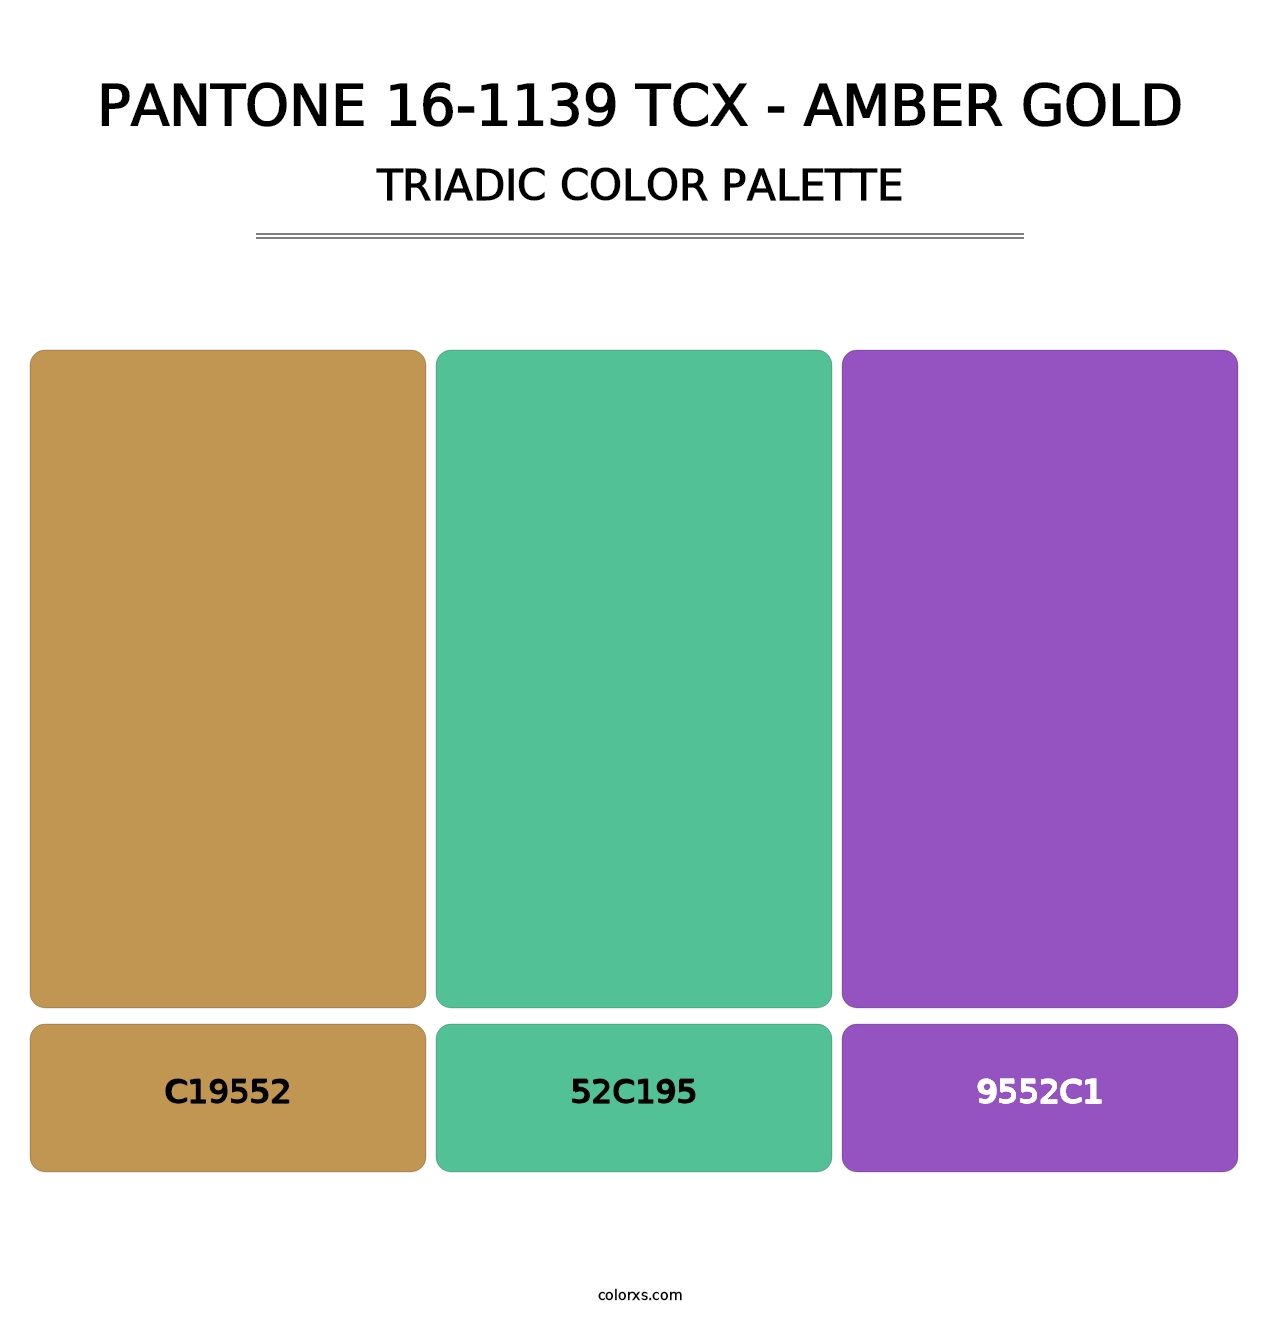 PANTONE 16-1139 TCX - Amber Gold - Triadic Color Palette